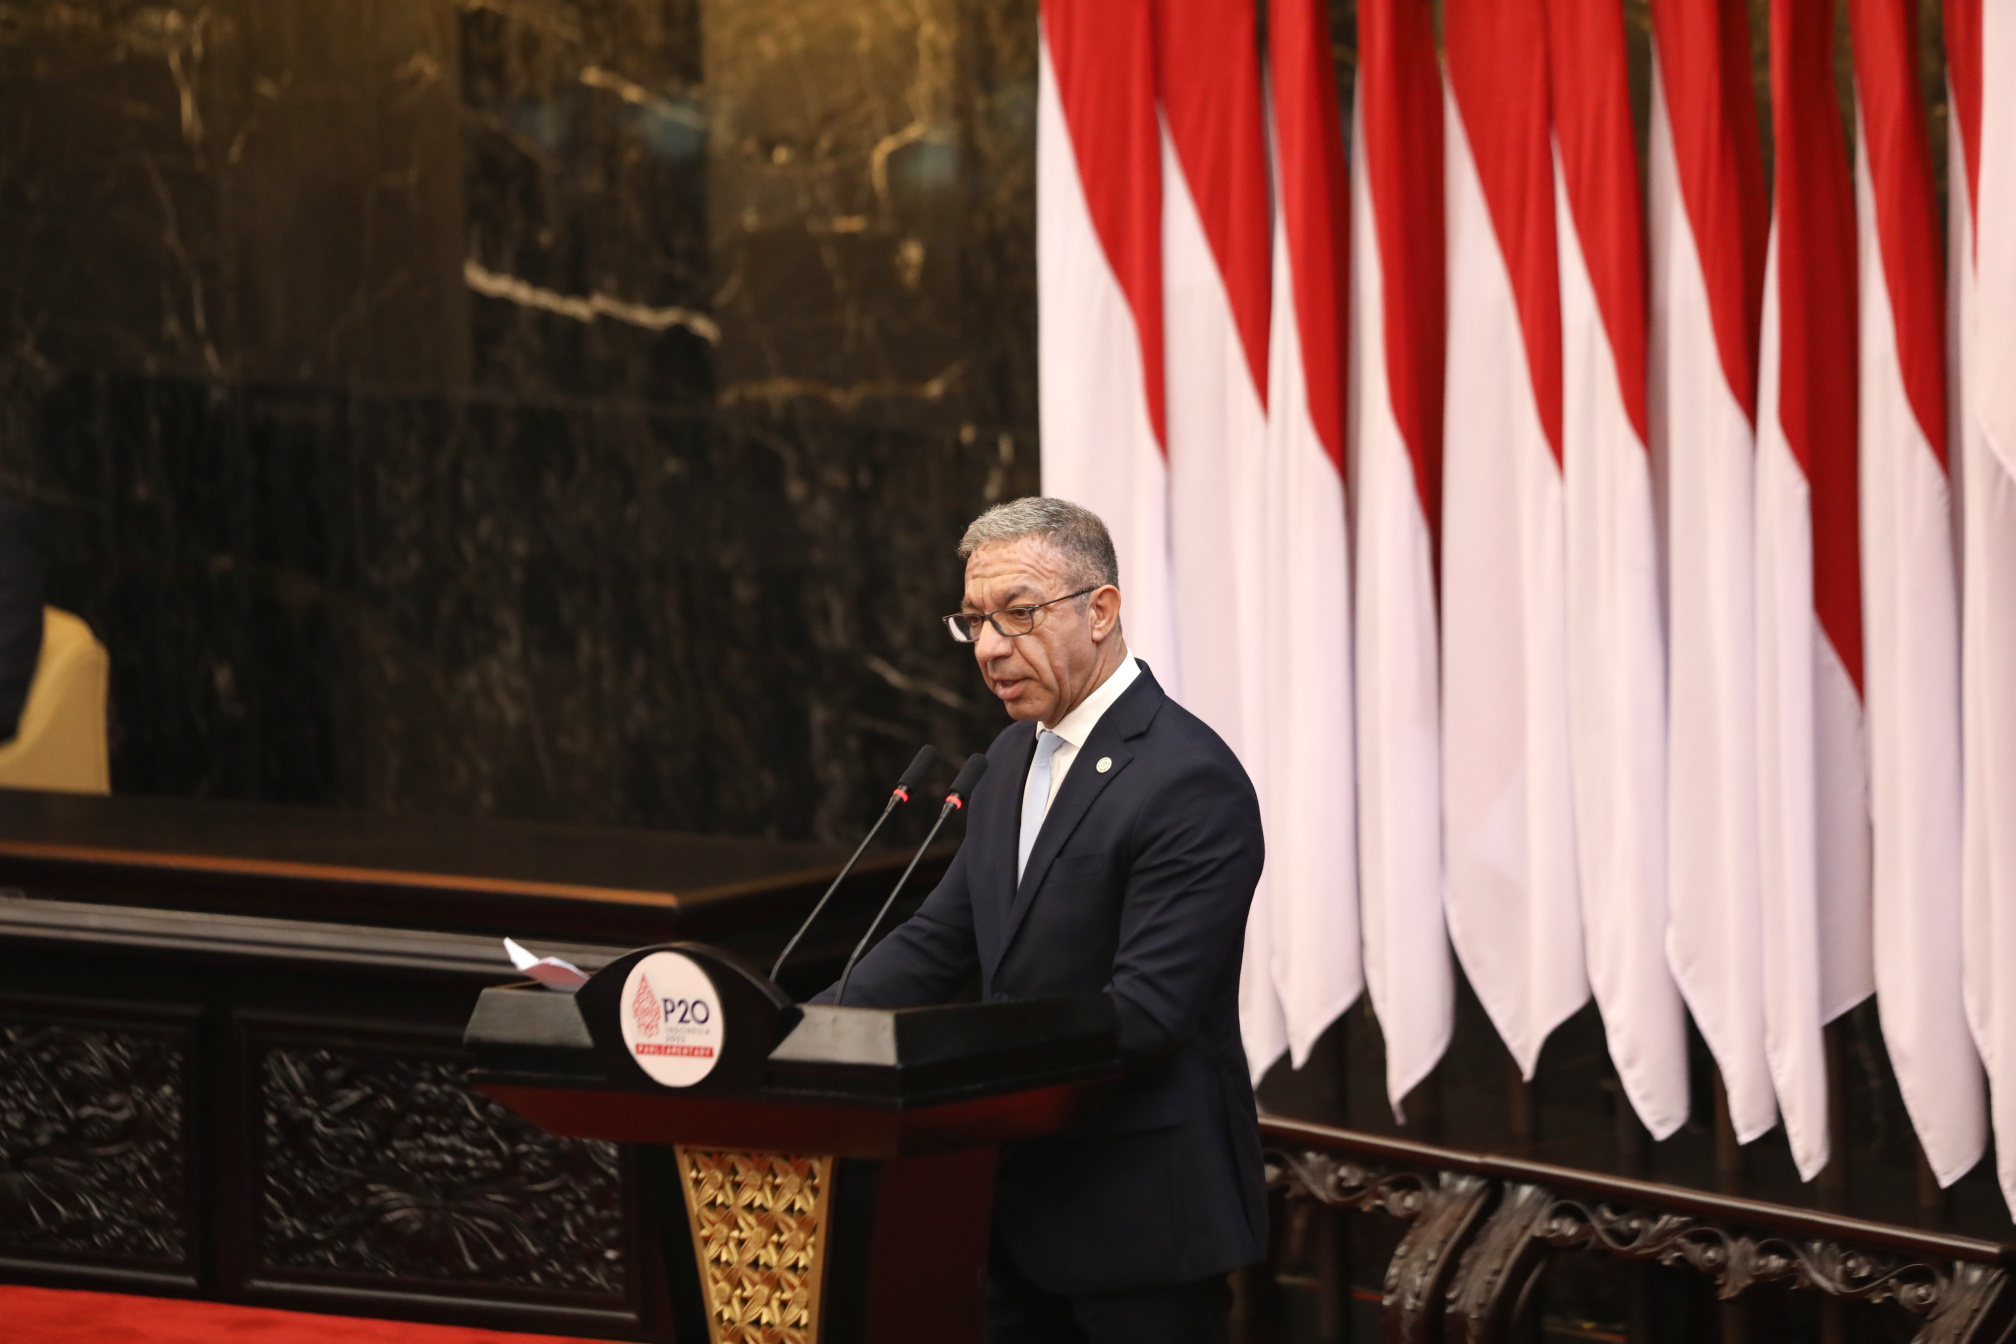 Presiden Jokowi membuka The G20 Parliamentary Speakers' Summit (P20) di Gedung Nusantara DPR RI (Ashar/SinPo.id)